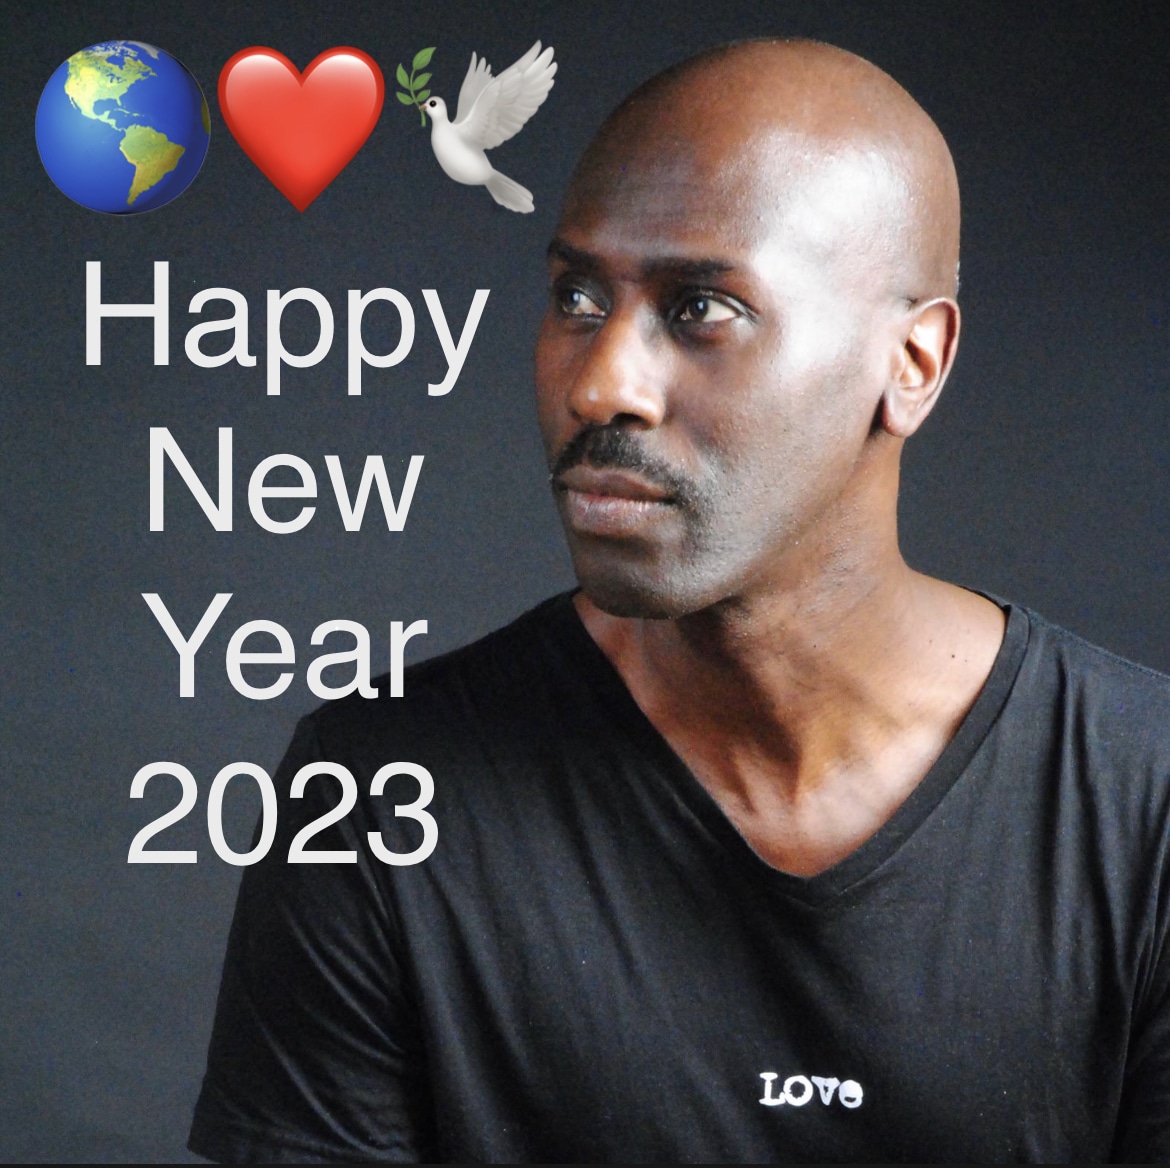 Happy New Year Jan 2023 from Rasheed Ogunlaru, Coach - Speaker - Author